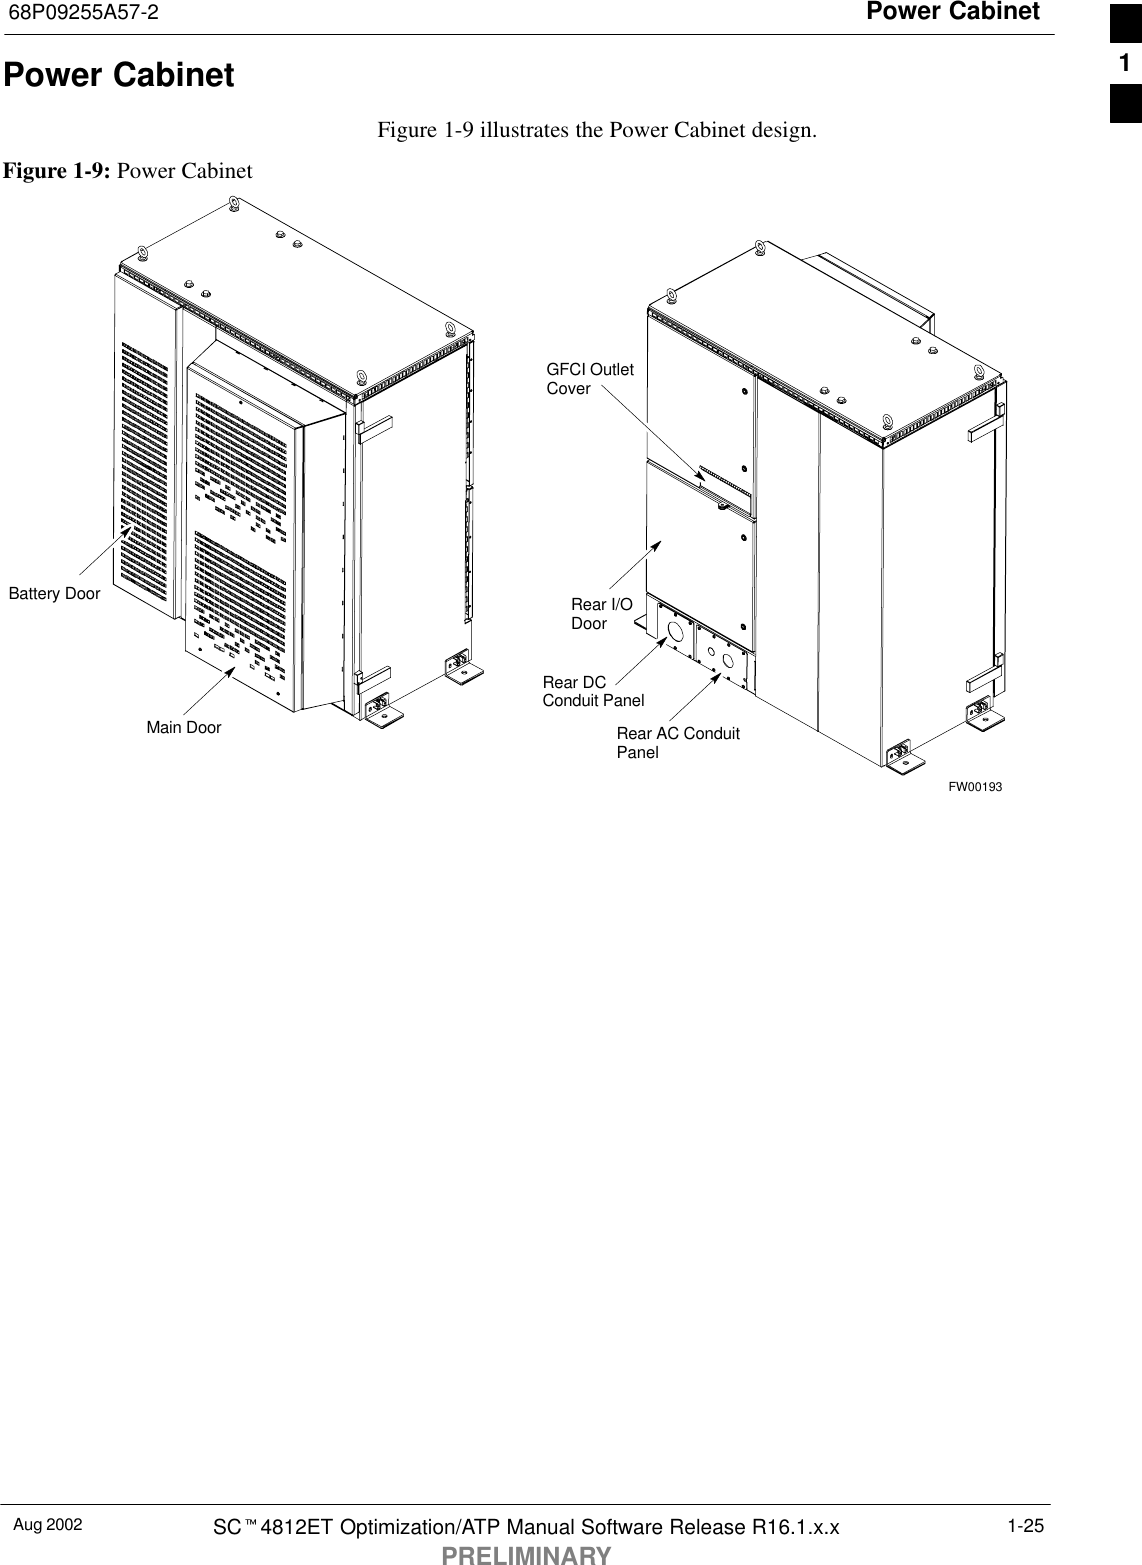 Power Cabinet68P09255A57-2Aug 2002 SCt4812ET Optimization/ATP Manual Software Release R16.1.x.xPRELIMINARY1-25Power CabinetFigure 1-9 illustrates the Power Cabinet design.Figure 1-9: Power CabinetGFCI OutletCoverRear I/ODoorRear AC ConduitPanelBattery DoorMain DoorRear DCConduit PanelFW001931